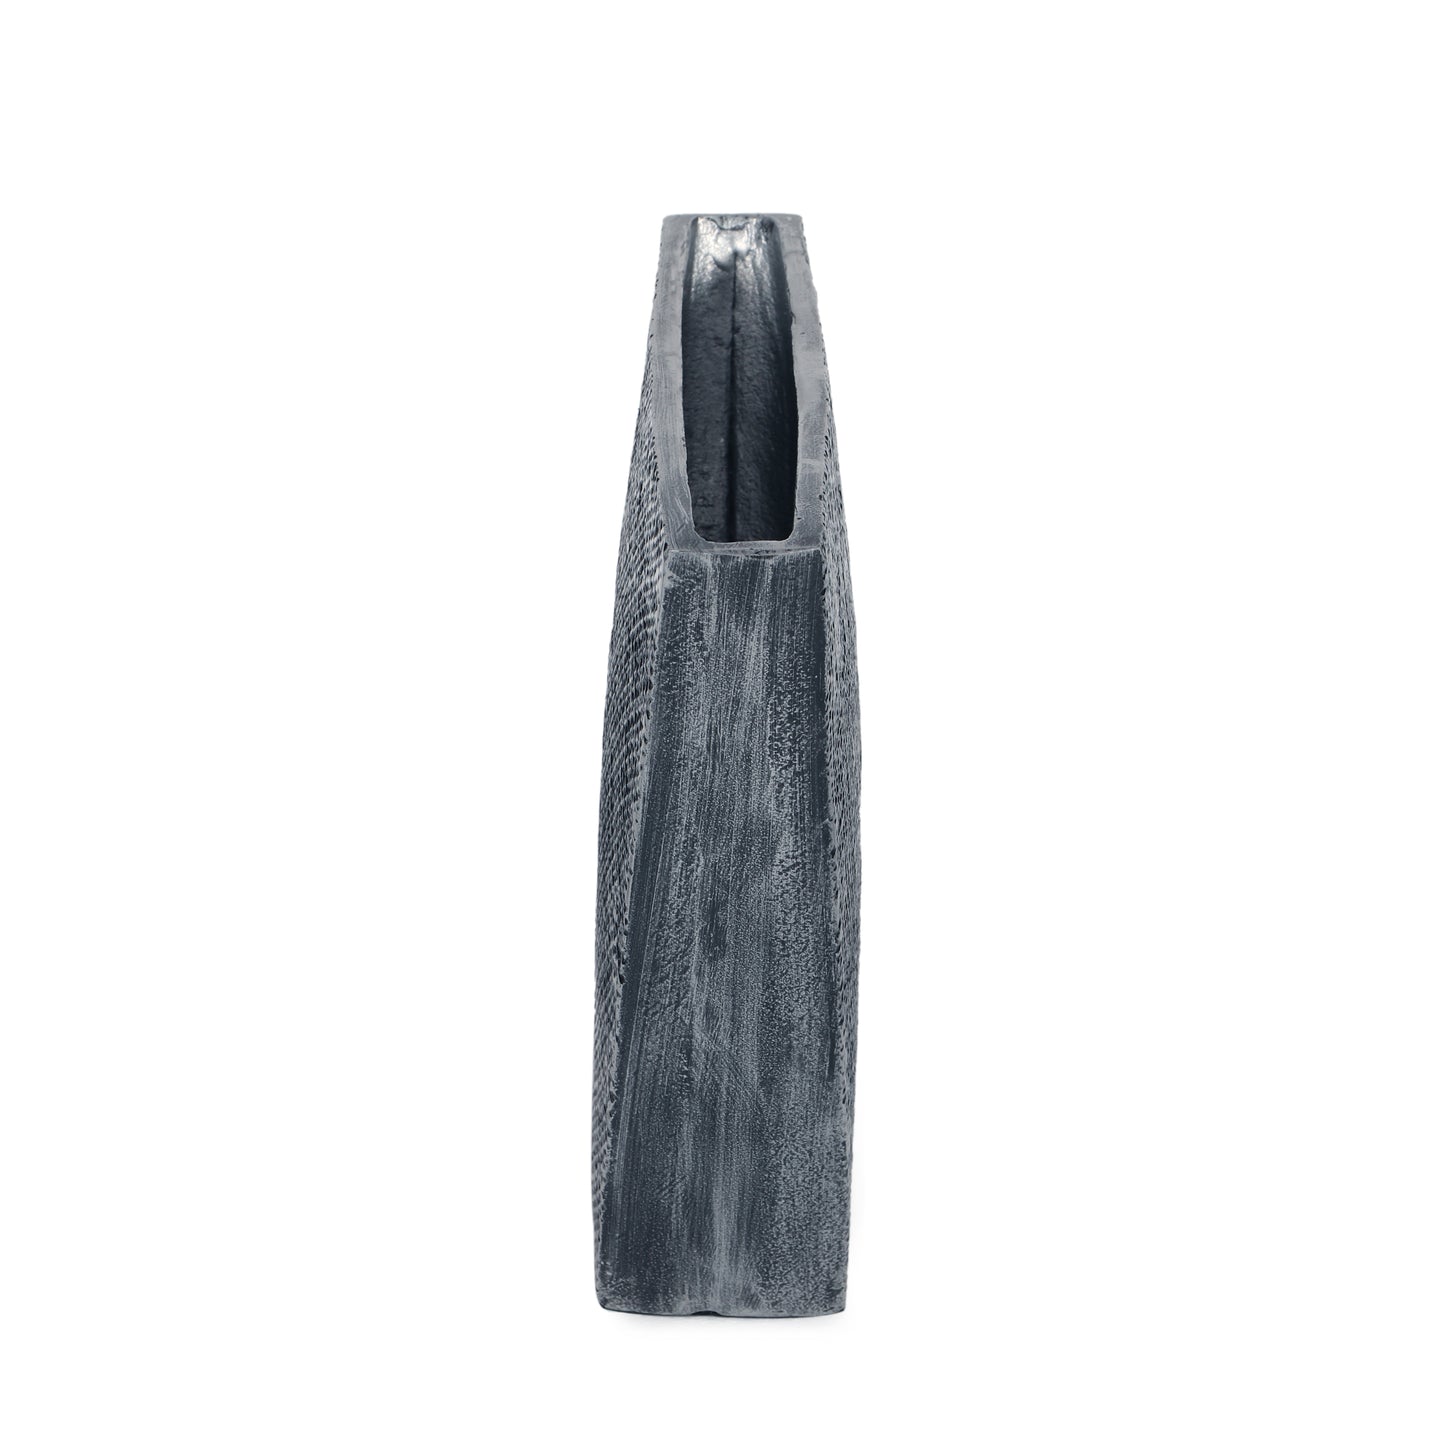 Currier Modern Handmade Aluminum Flat Vase, Charcoal